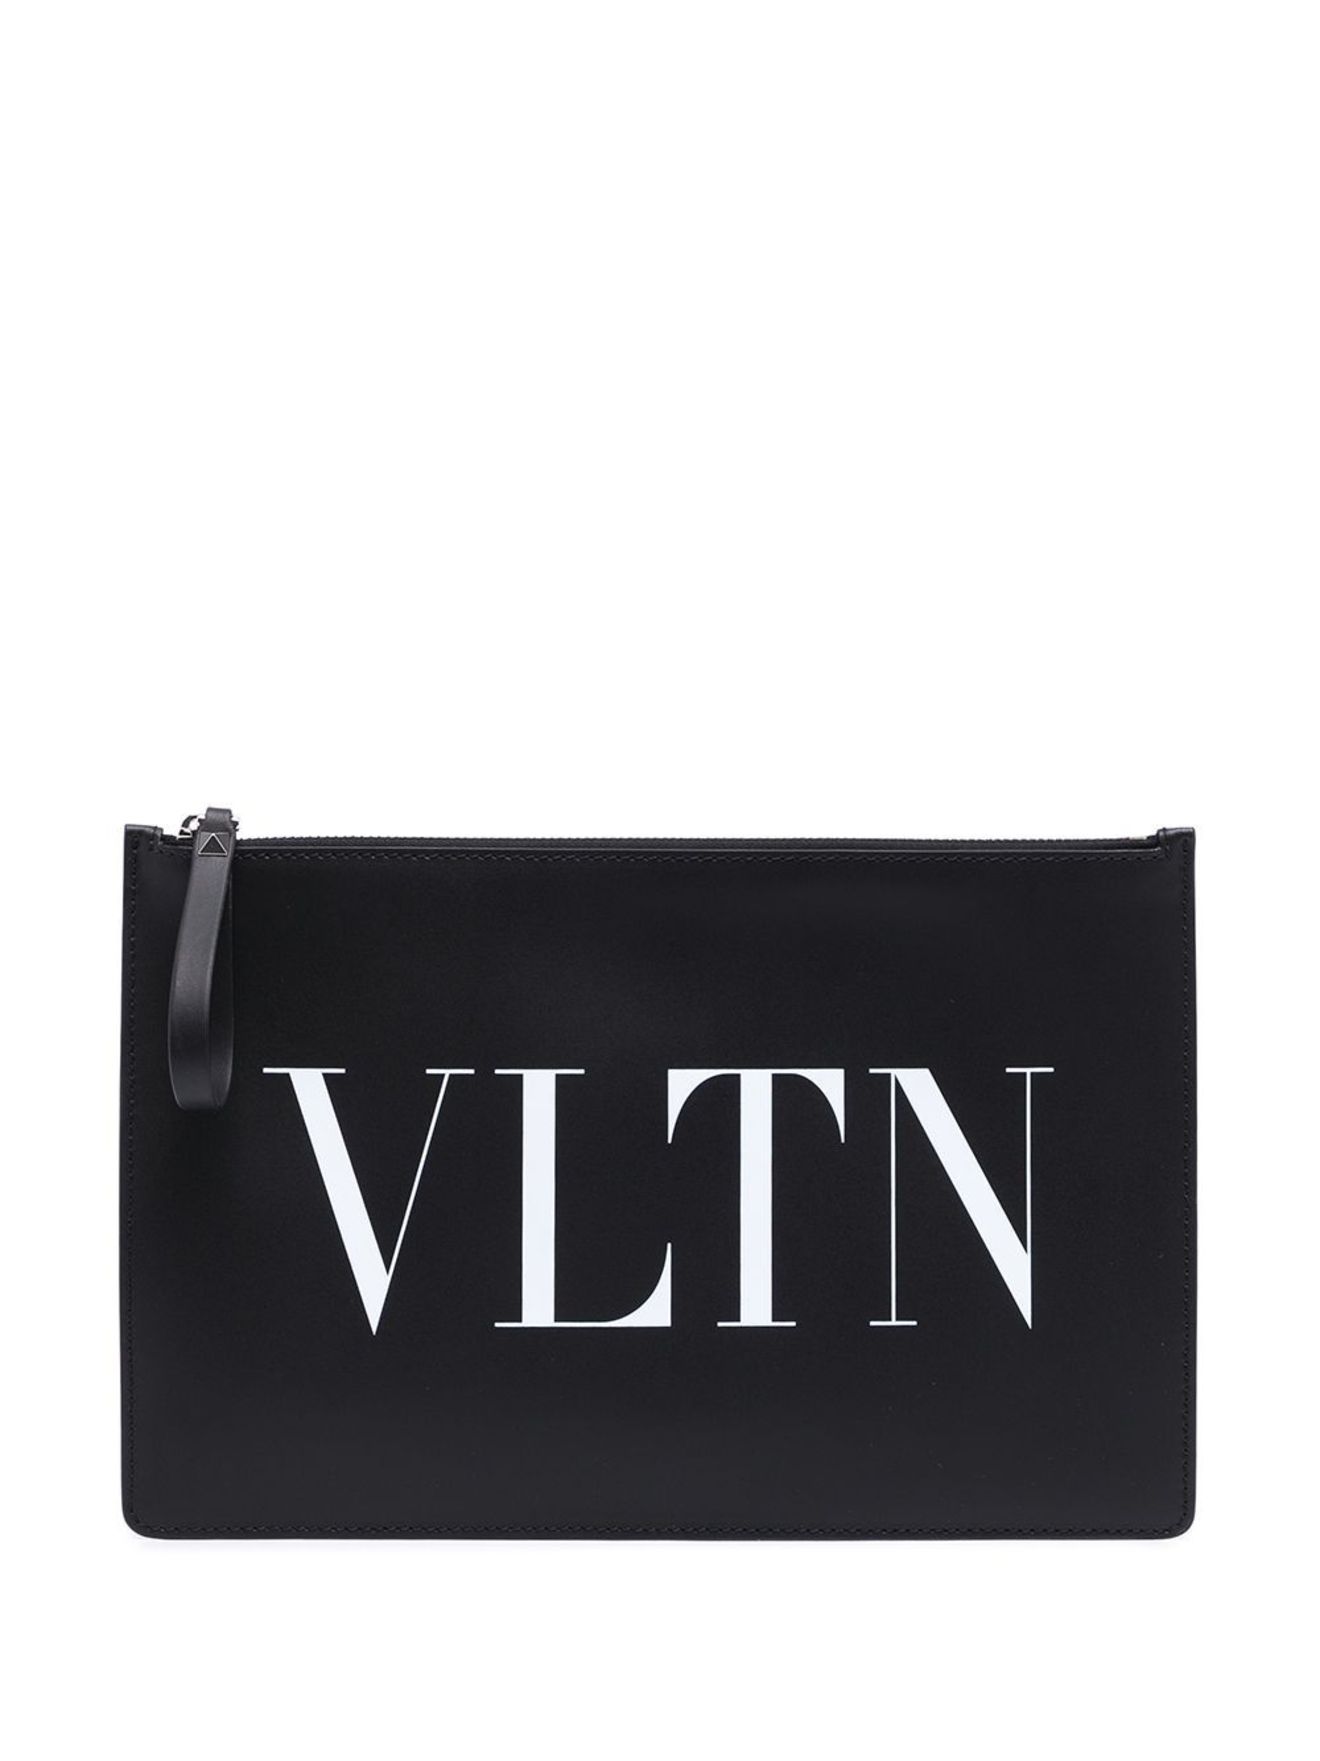 Valentino Garavani VLTN clutch black | MODES